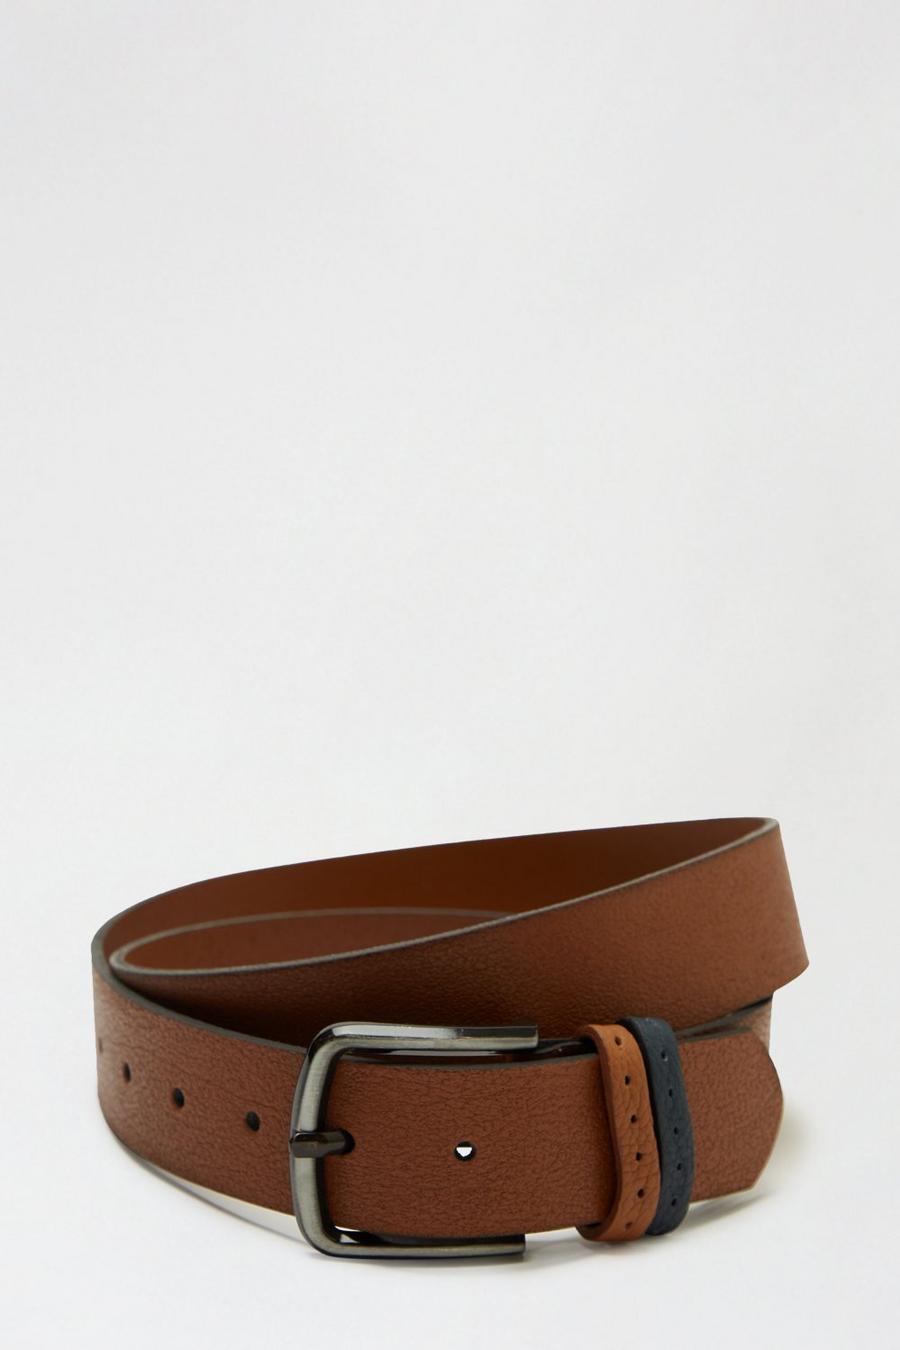 Leather Tan Double Contrast Keeper Belt